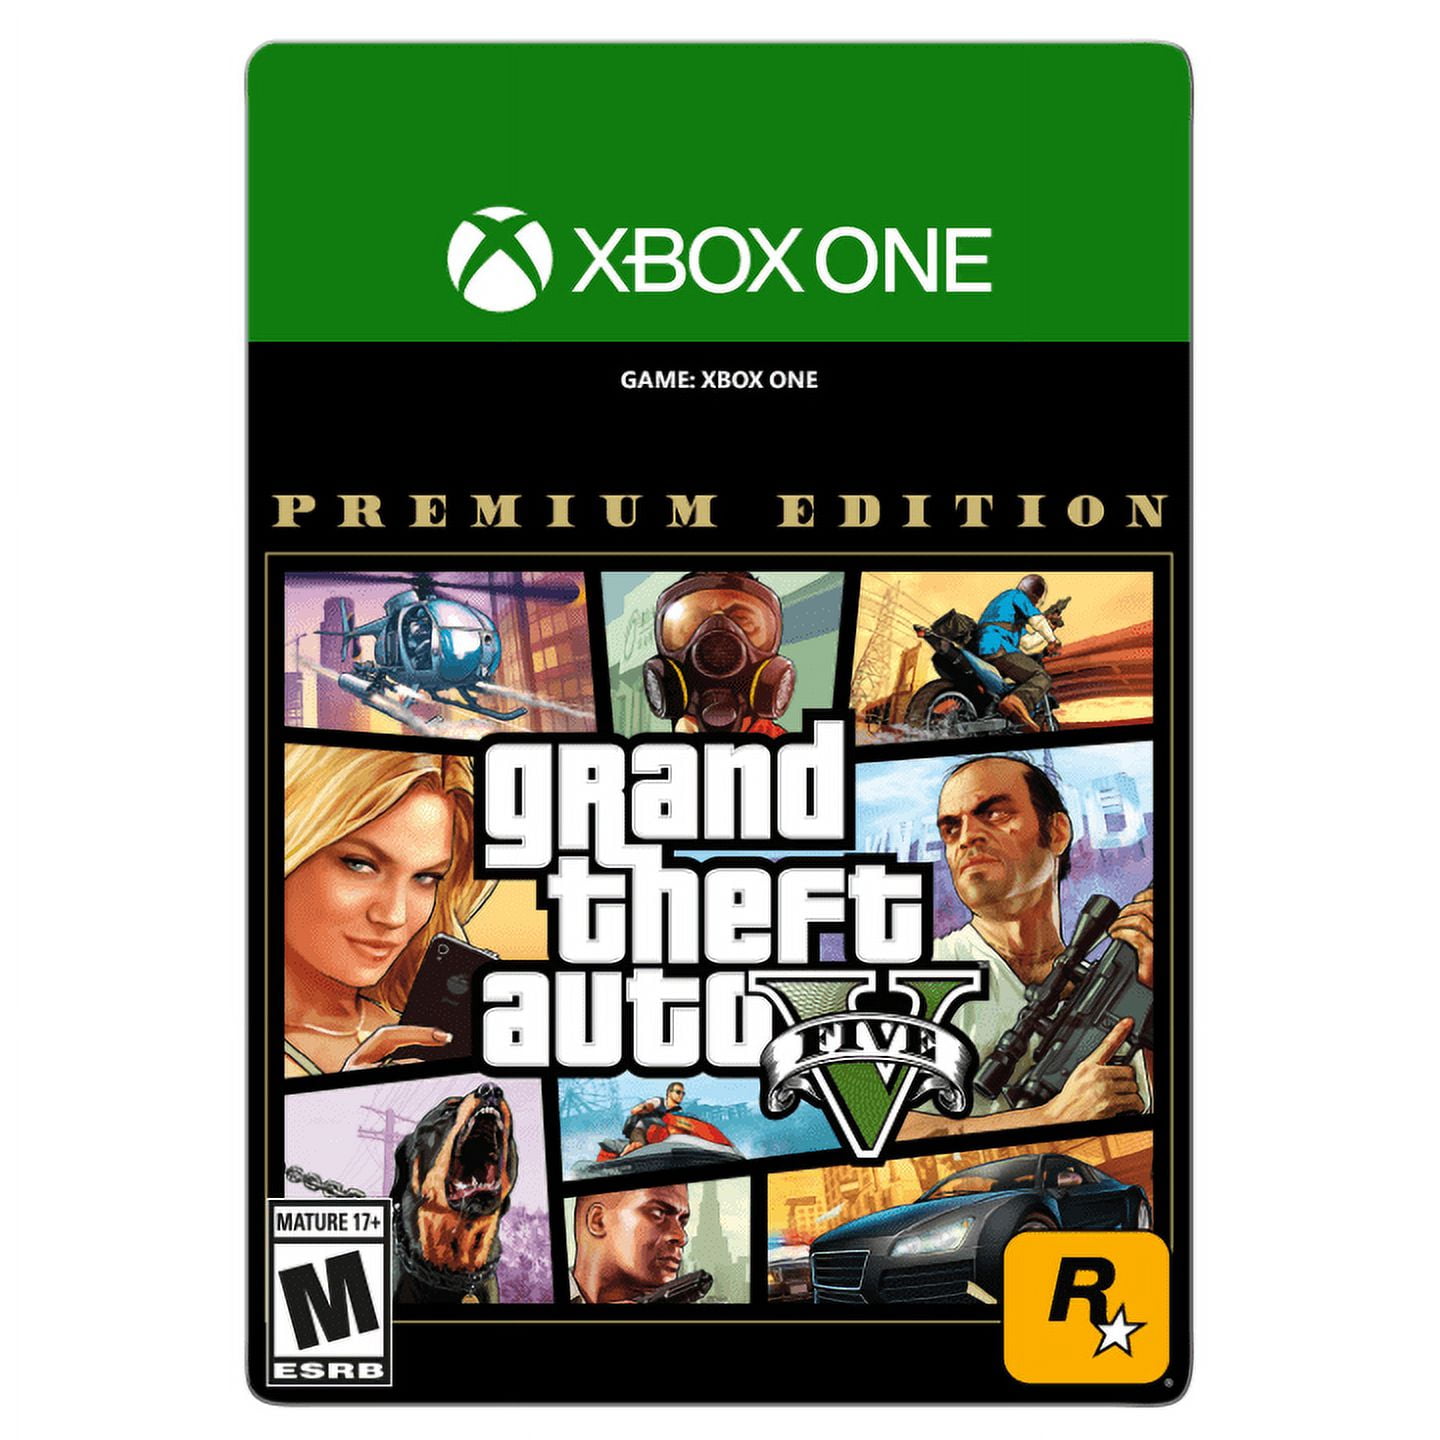 Grand Theft Auto V GTA 5 for Mocrosoft XBOX 360 Complete w/ Map Good  Condition